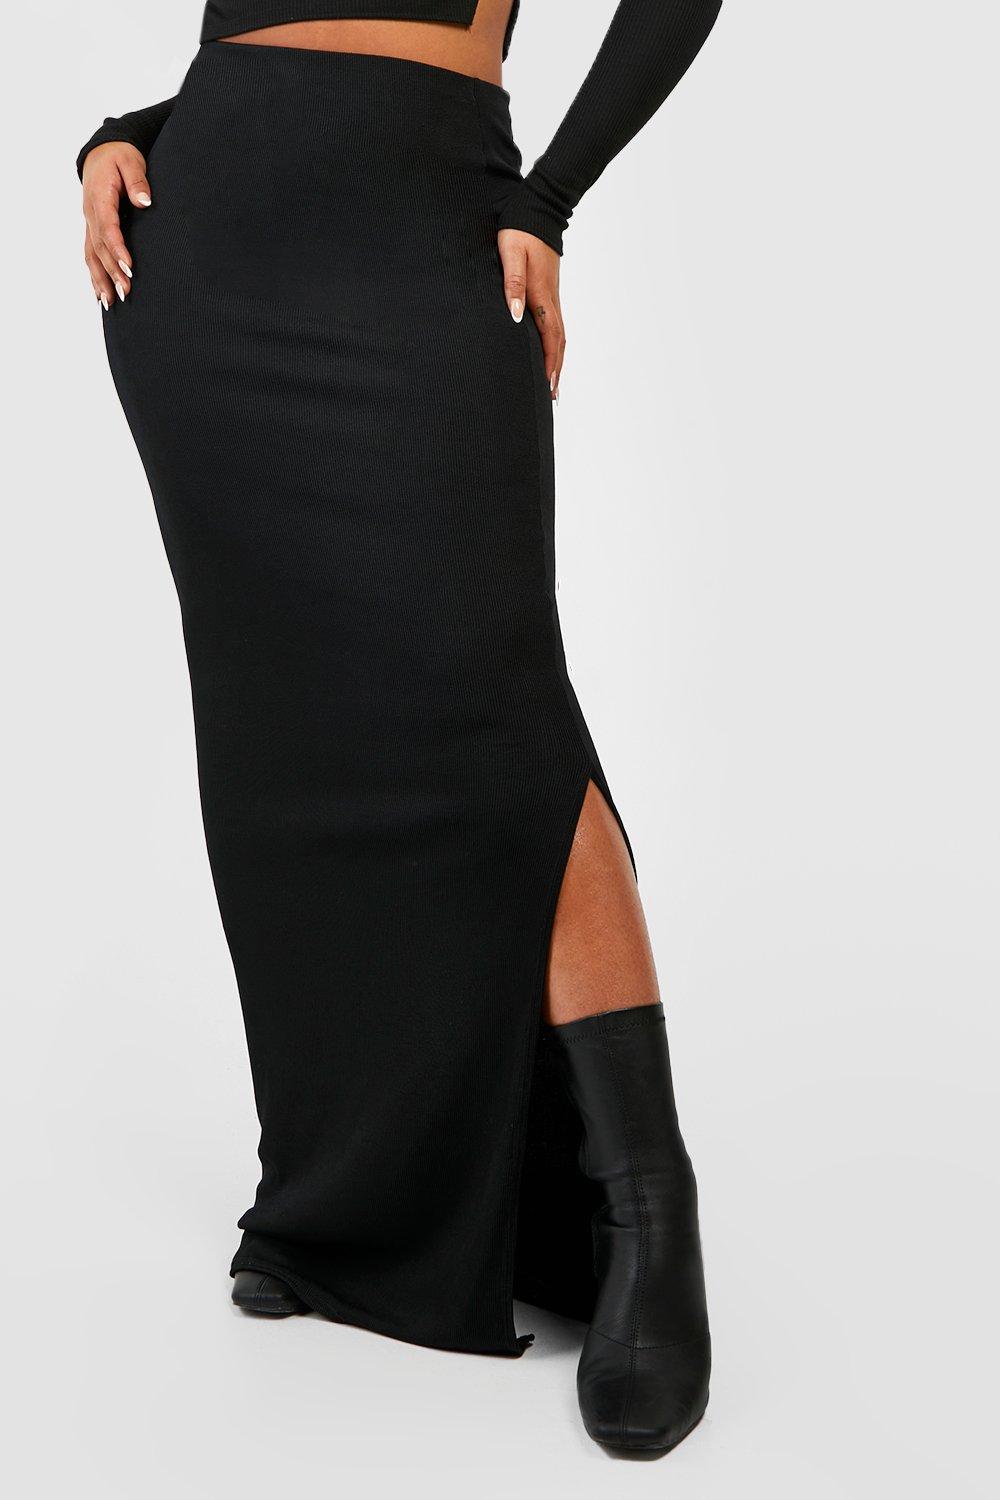 Basic Solid Black High Waisted Split Maxi Skirt